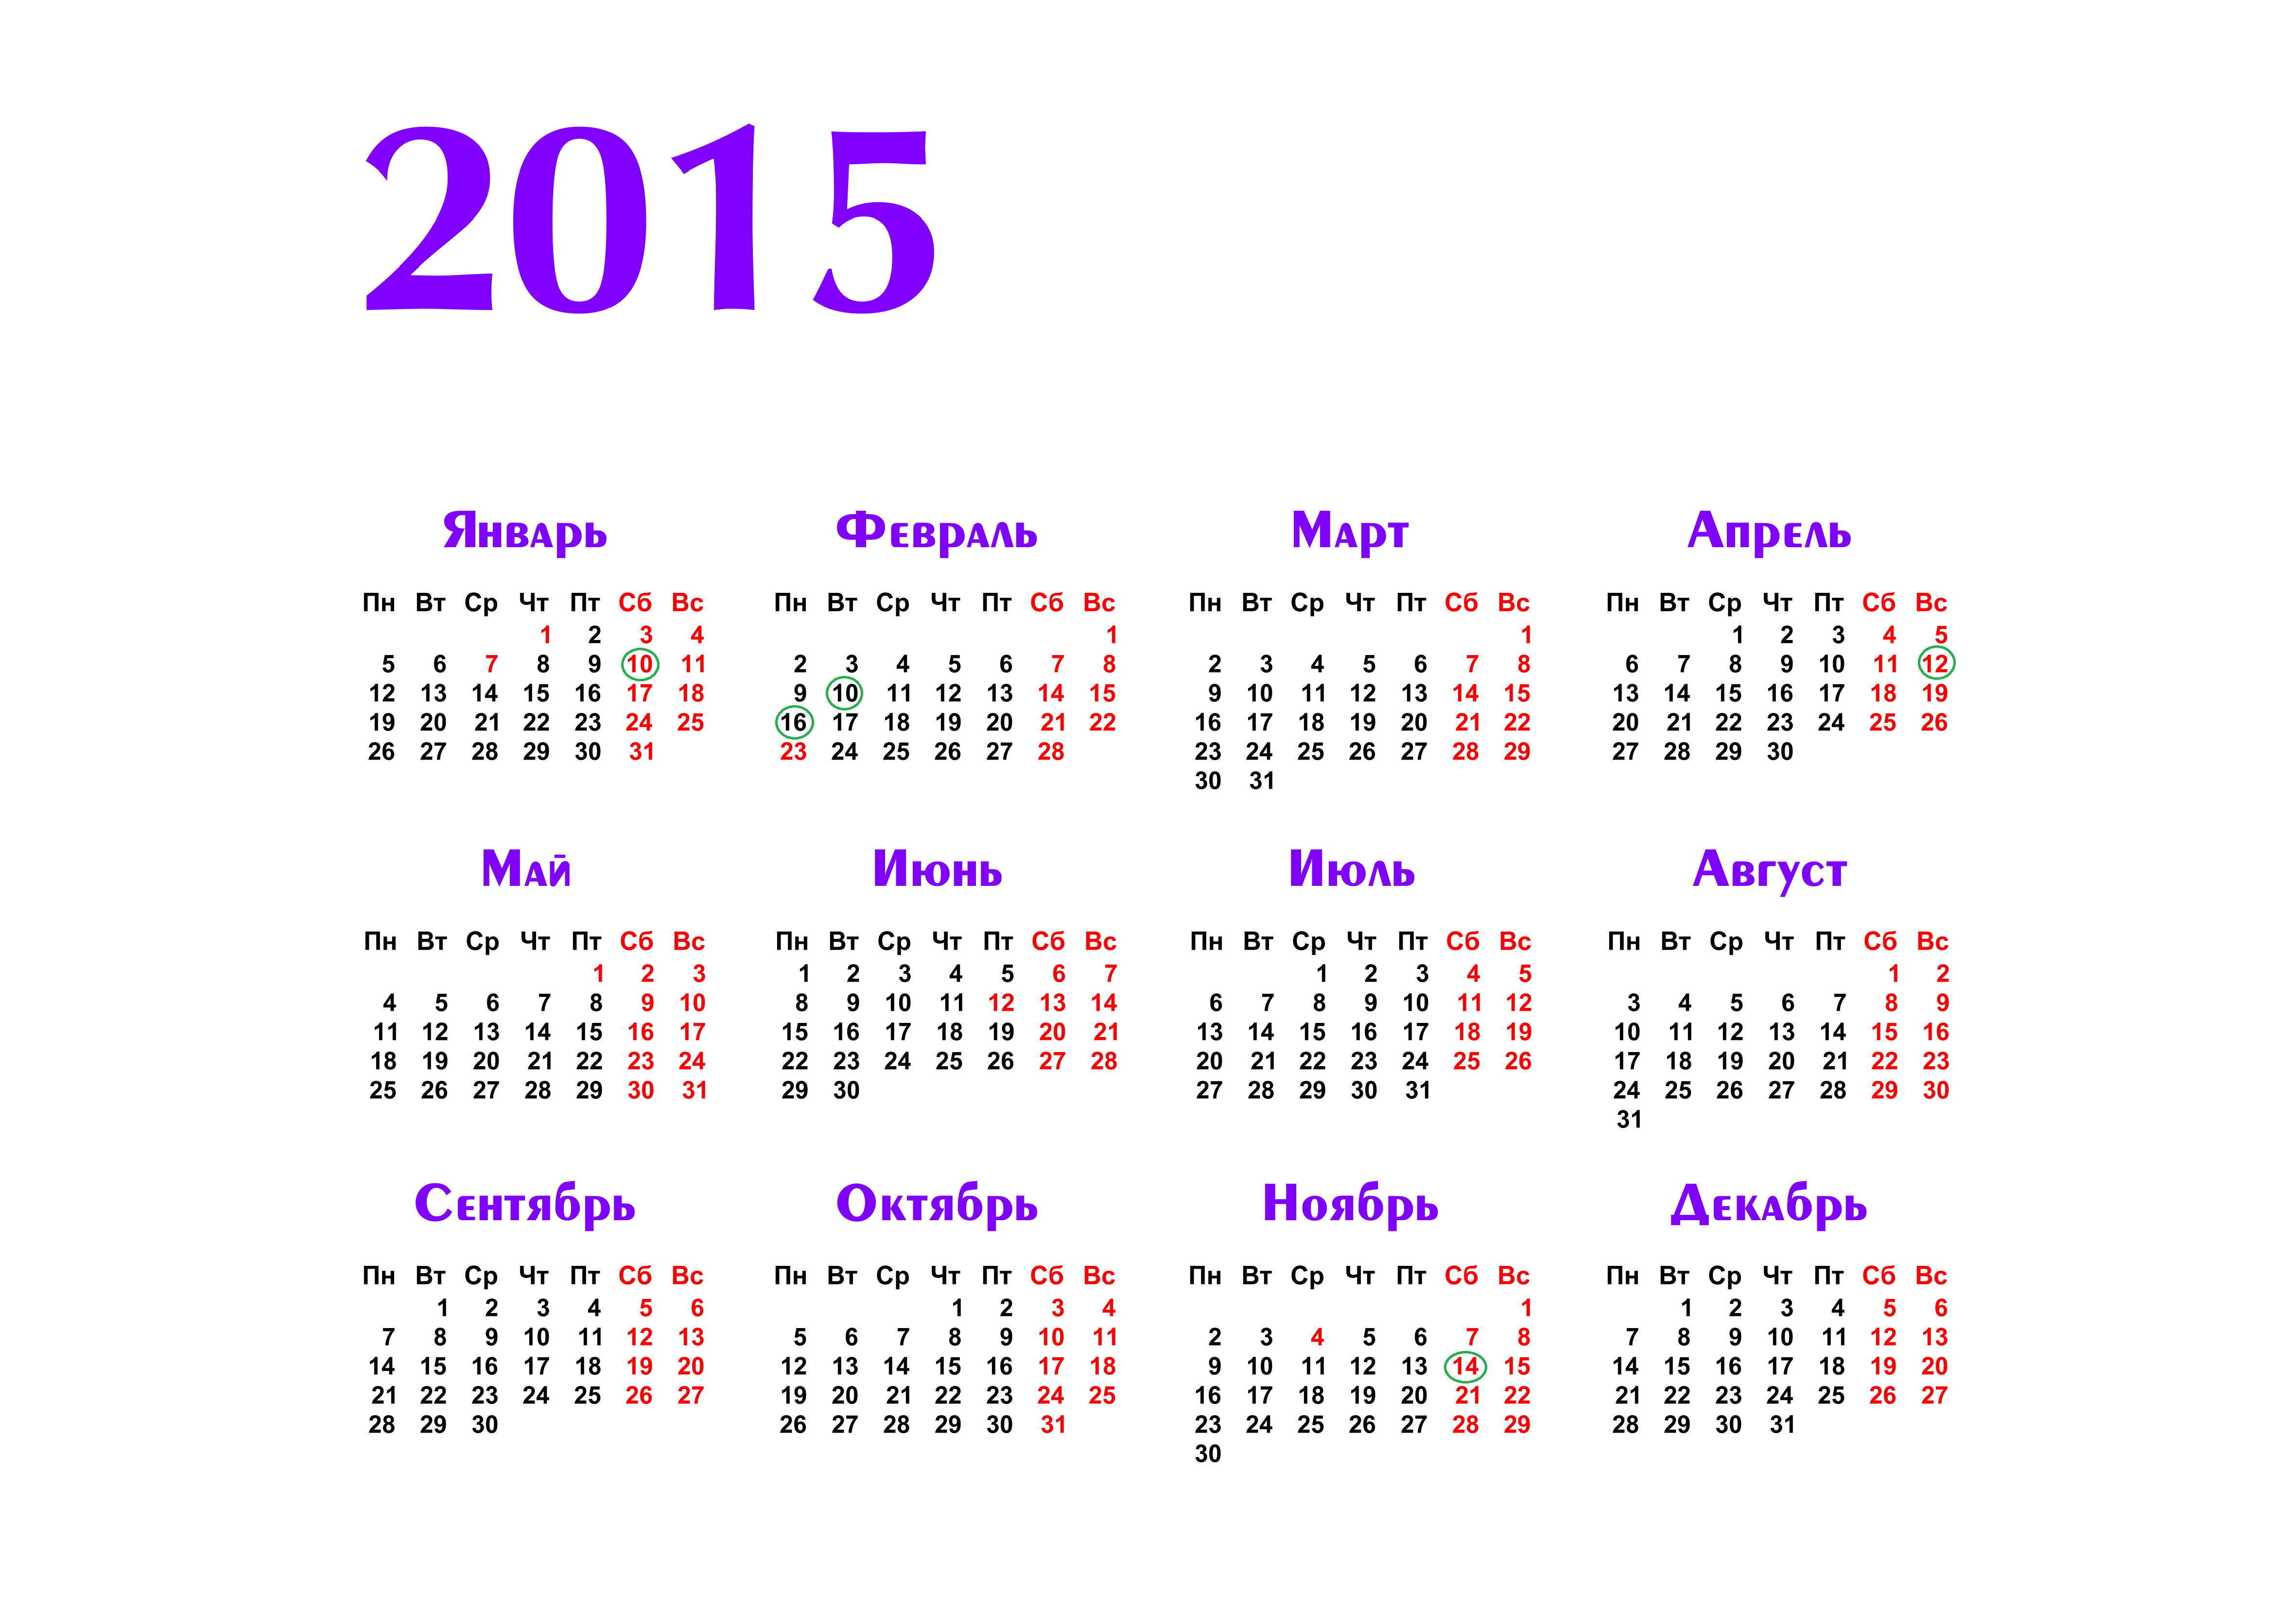 30 апреля 2015 года. Календарь на 2015 год. Календарь 2015 года по месяцам. Календарь 2015г.по месяцам. Календарь 2015г.по месяцам календарные дни.